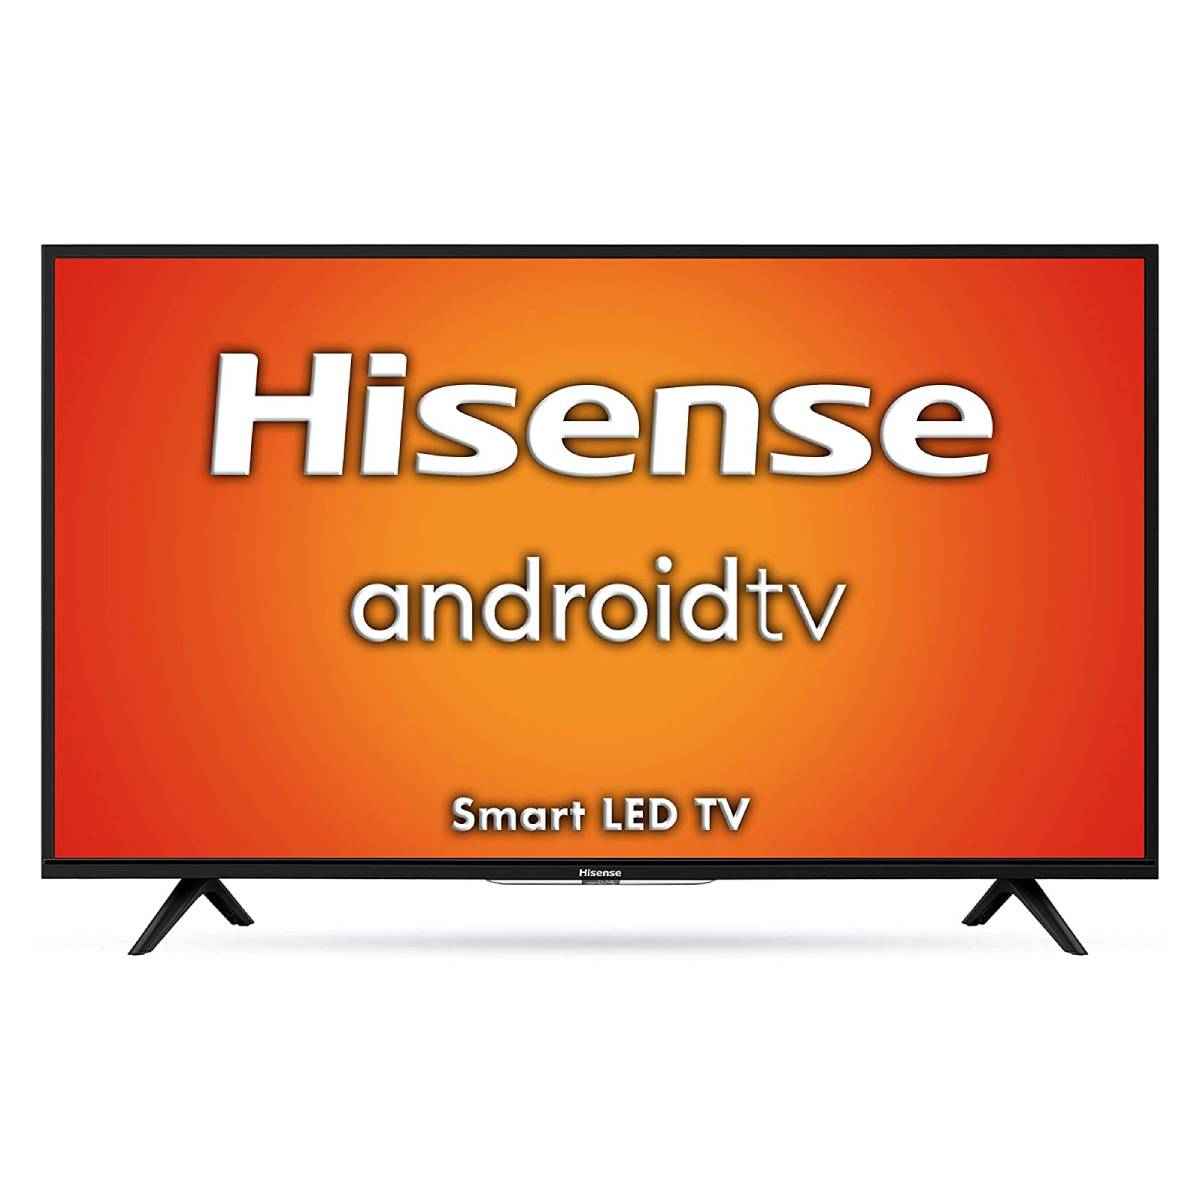 Hisense A56E 32-inch Full HD LED TV